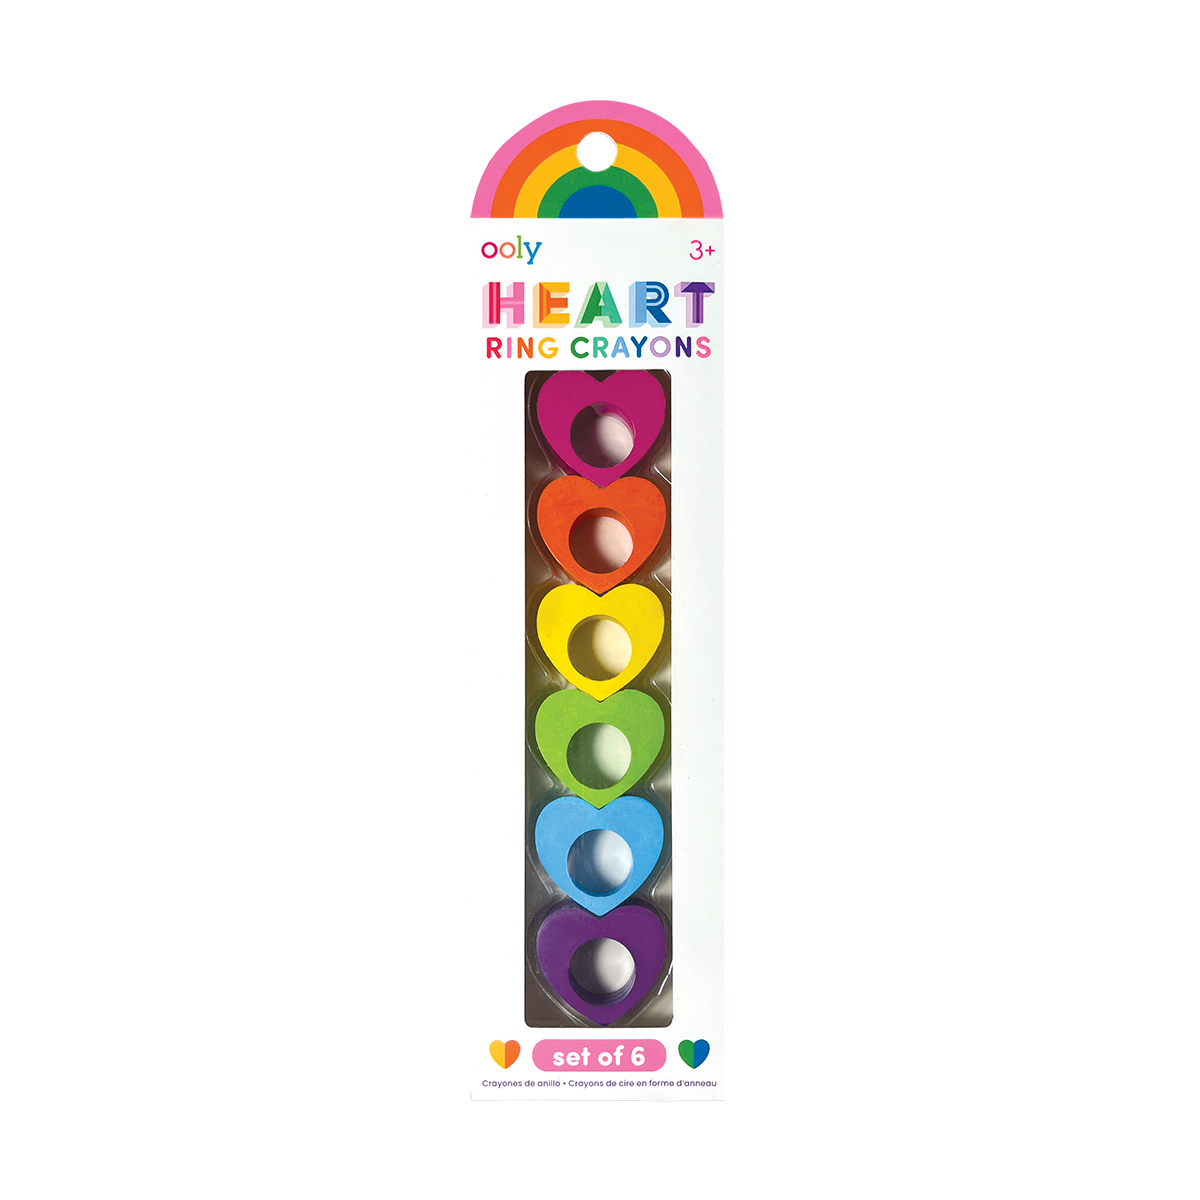 Rainbow Heart Plastic Bracelets - 12 Pc.